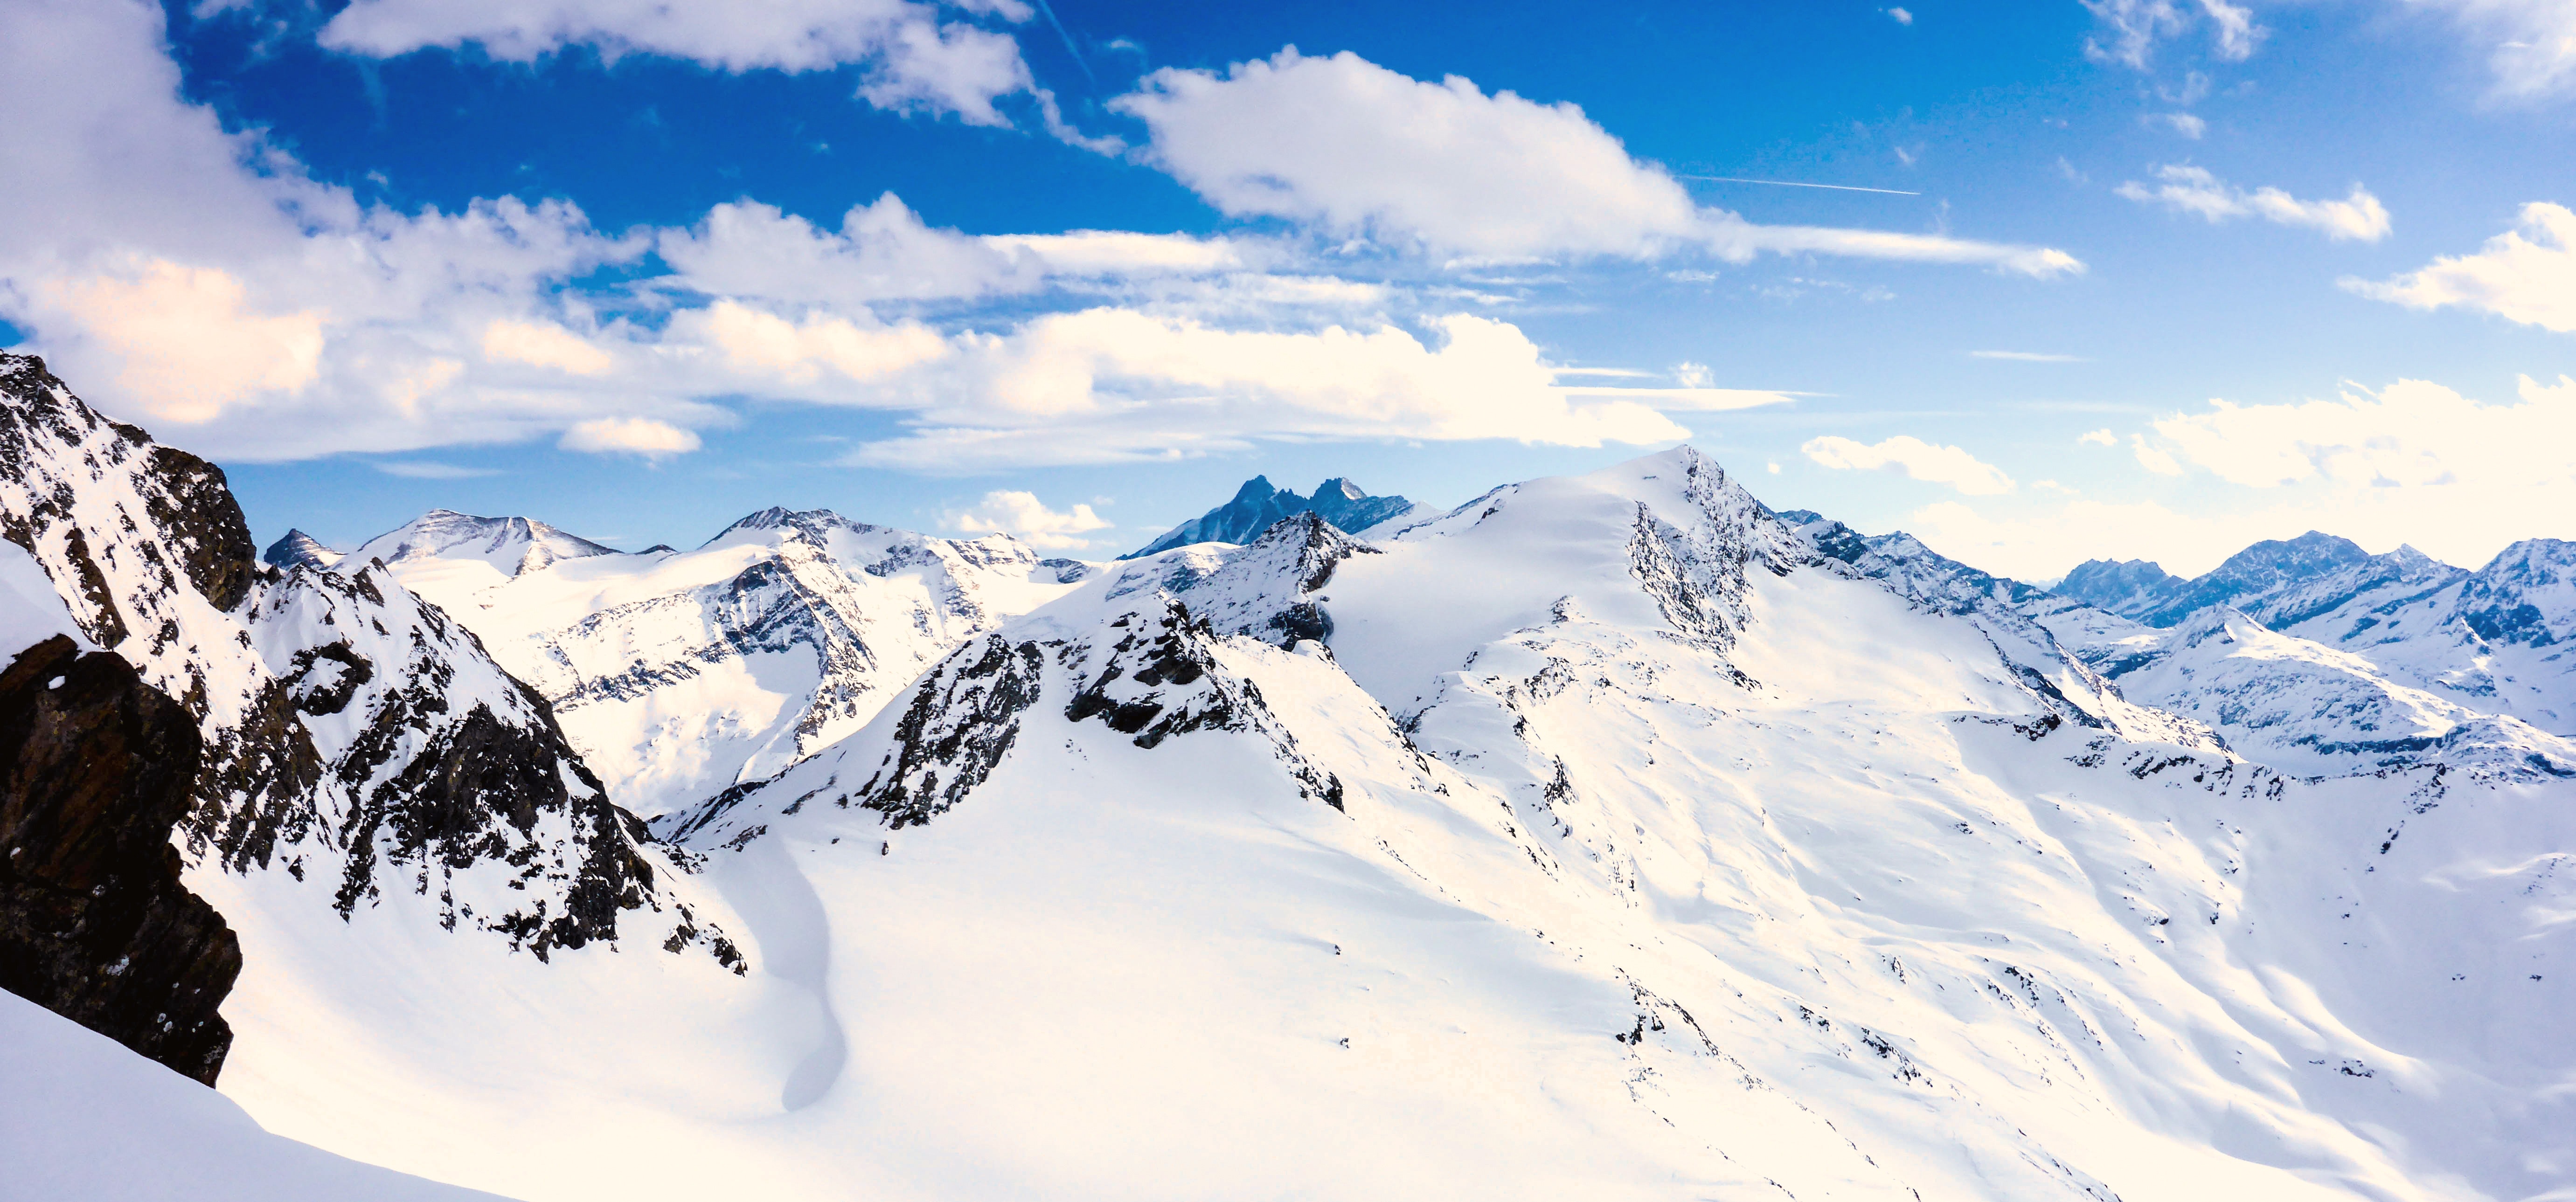 1000+ Engaging Snow Capped Mountains Photos · Pexels · Free Stock Photos